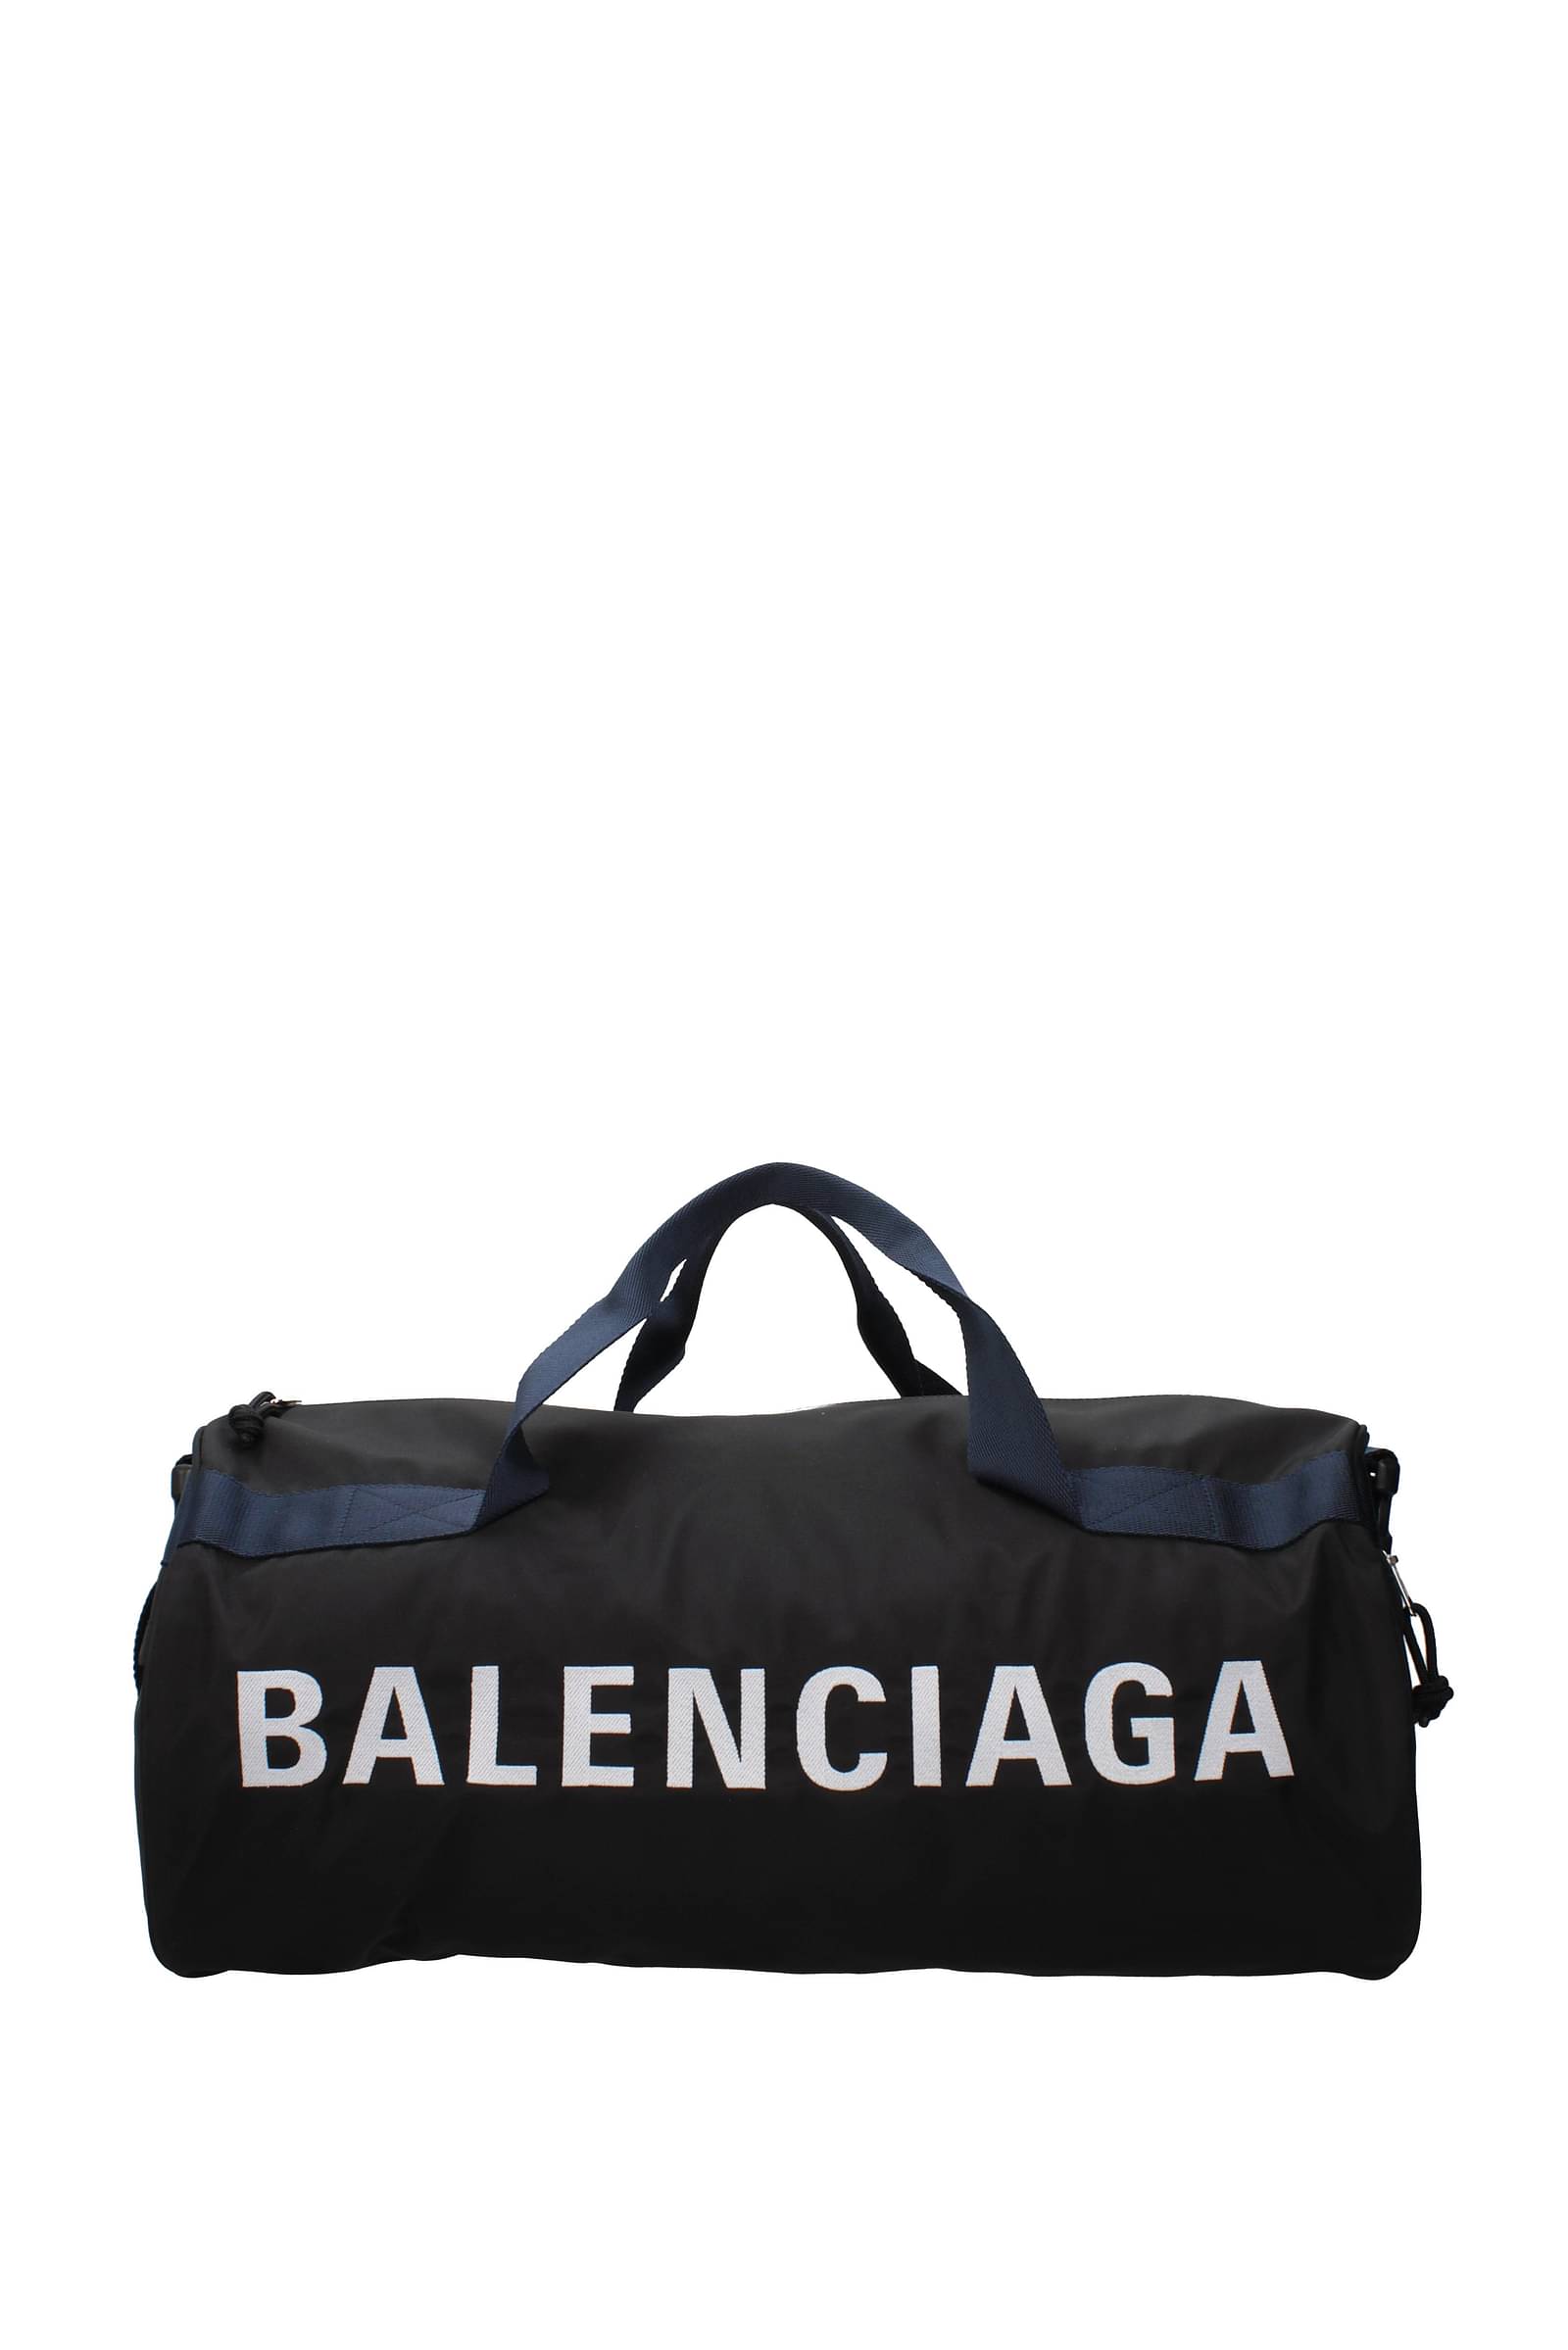 balenciaga Explorer duffle bag available on wwwjulianfashioncom   253658  KH